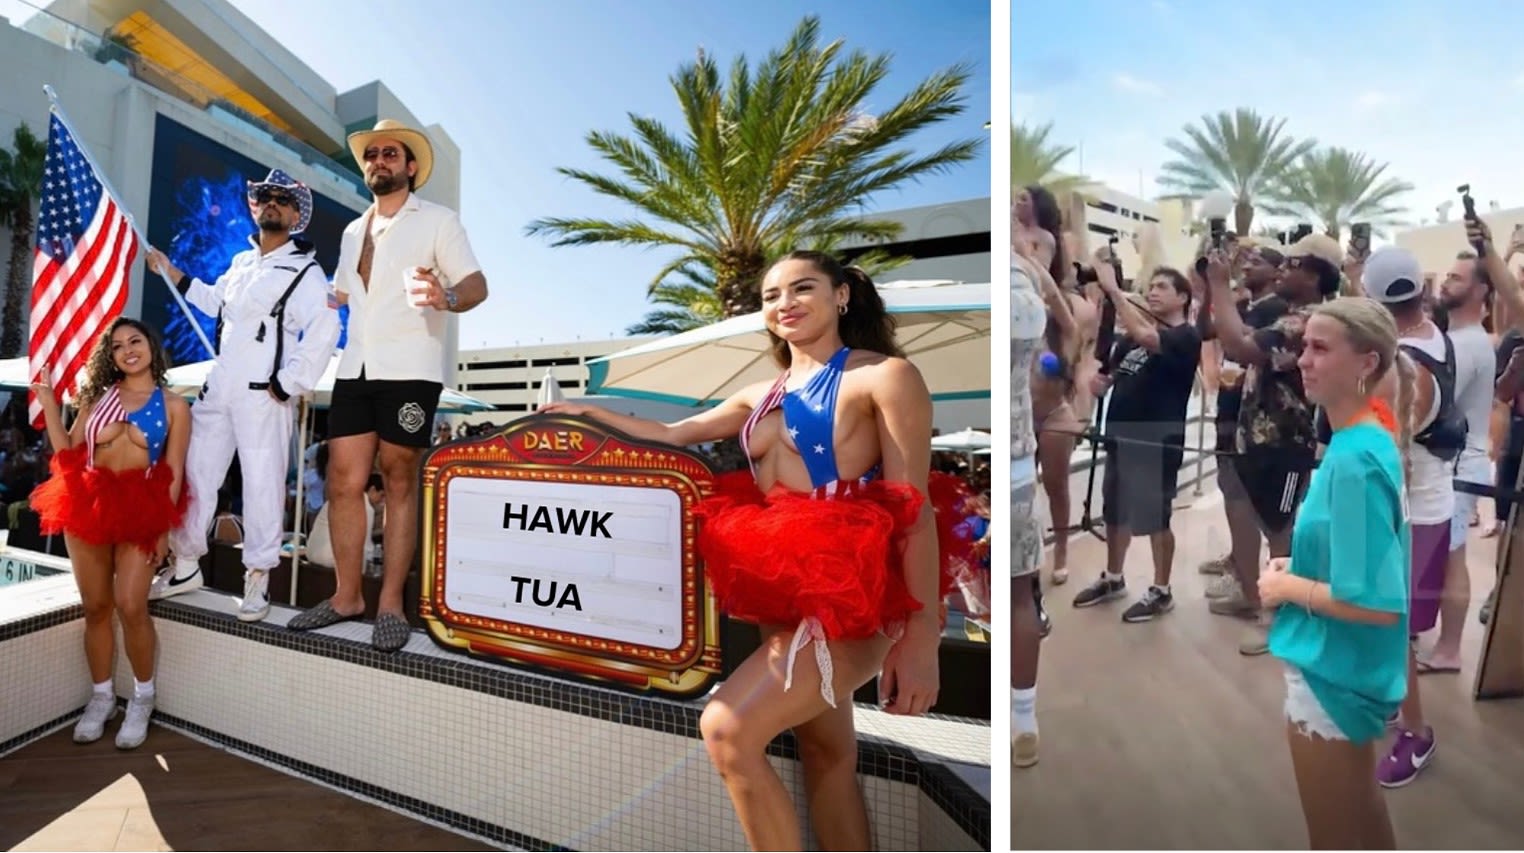 "Hawk Tuah Girl" Wears Tua Tagovailoa Jersey at Hard Rock Appearance